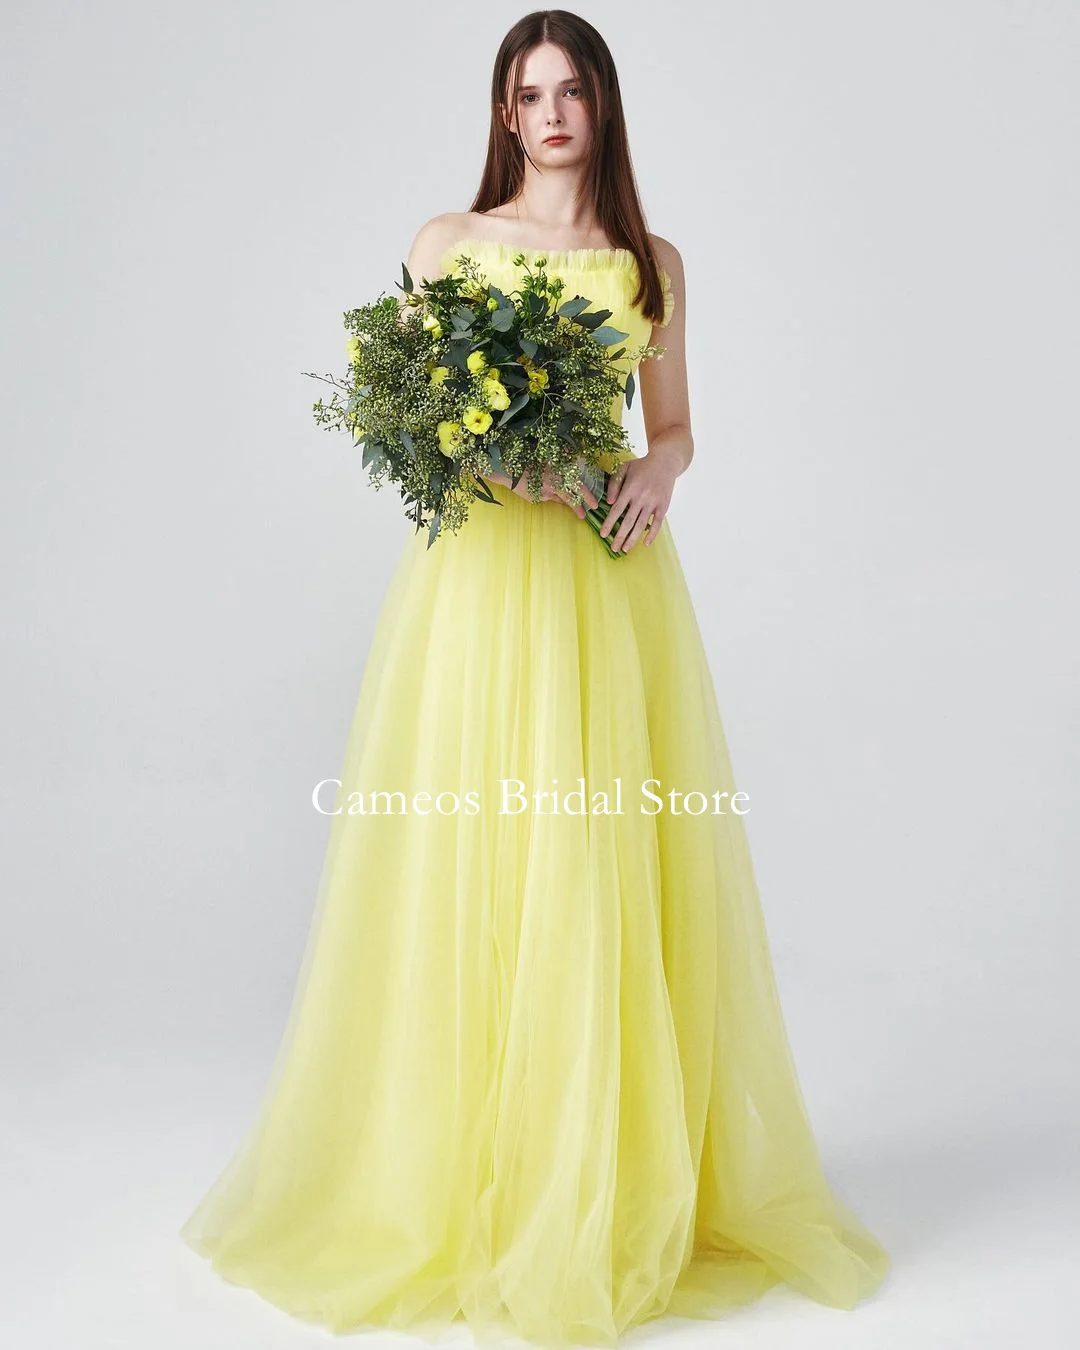 

SONDR Custom Made Tulle Wedding Dresses Sleeveless Strapless Korea Yellow Zipped Brides Gowns A-Line Women Bridal Dresses